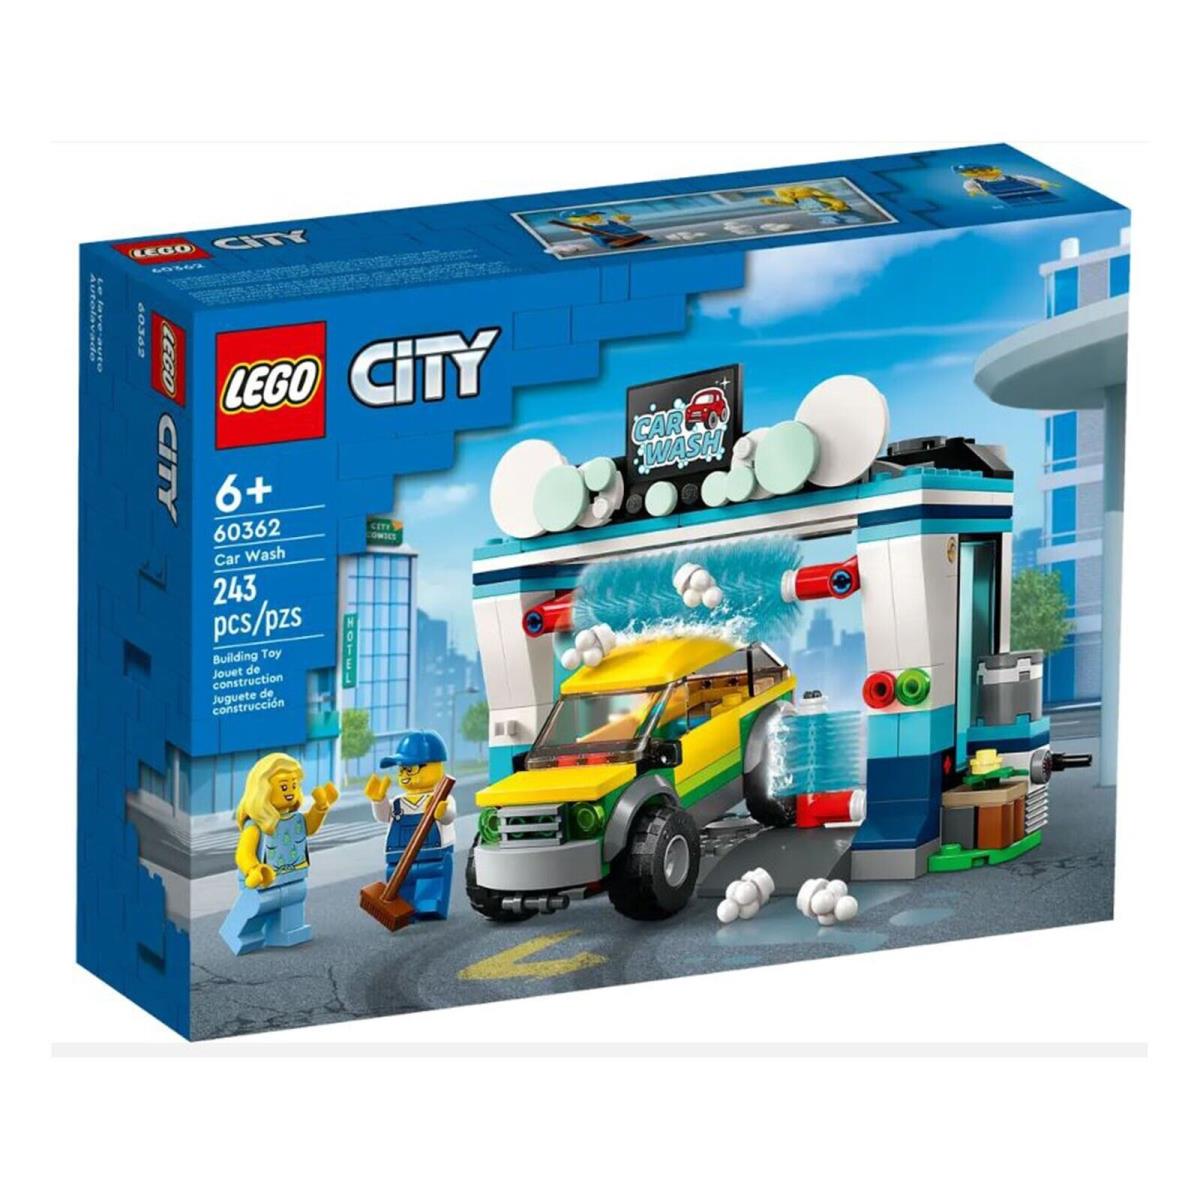 Lego City Car Wash Building Set 60362